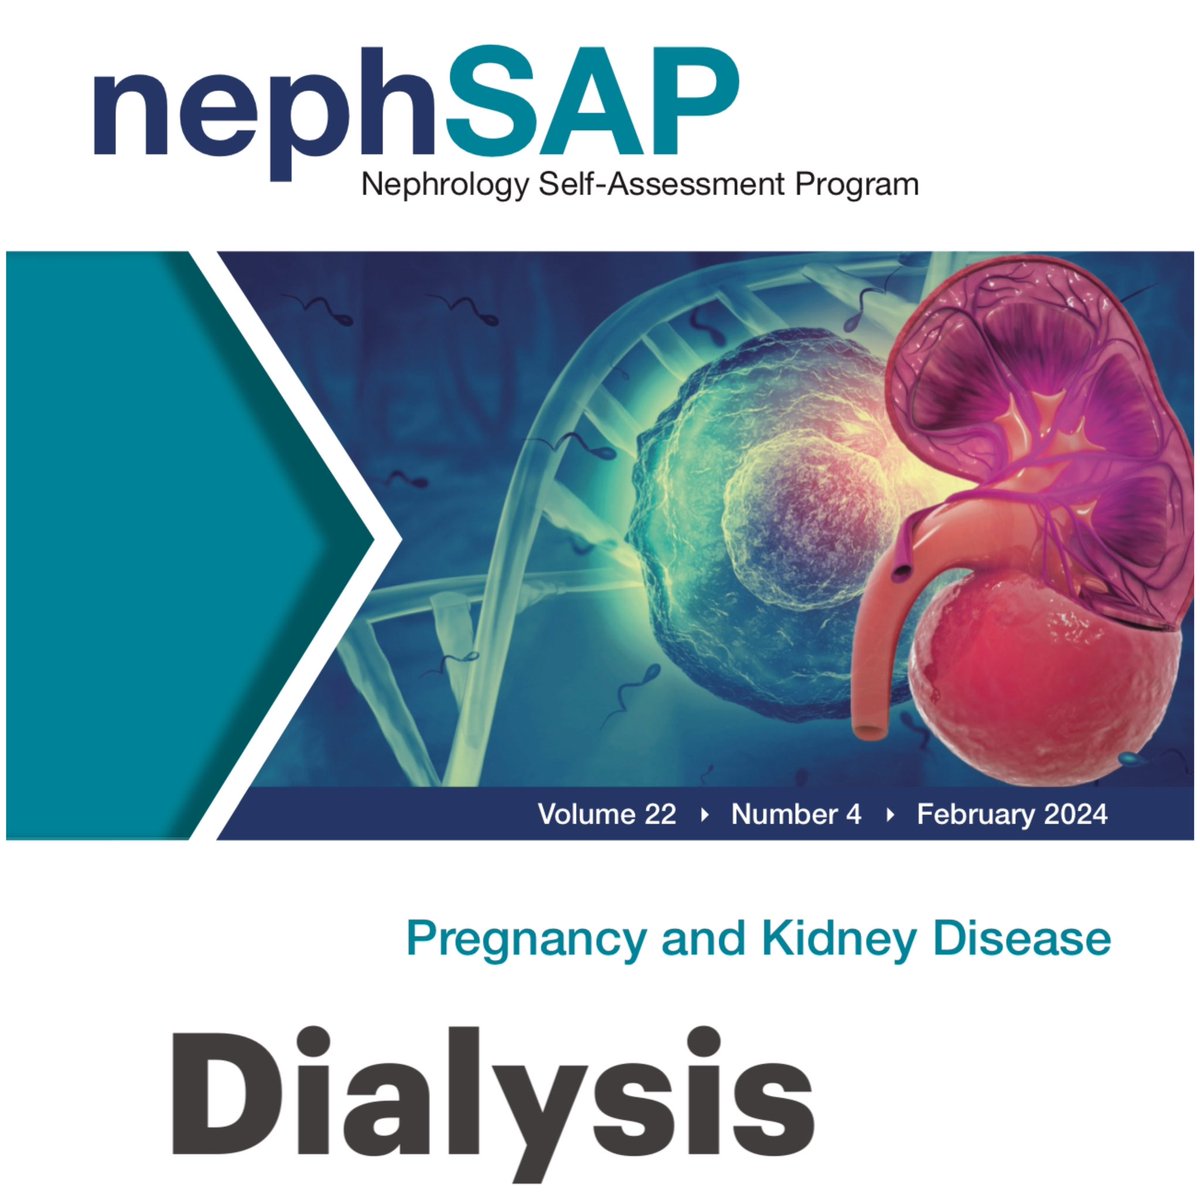 Summary of Dialysis in Pregnancy
#nepSAP
🧵